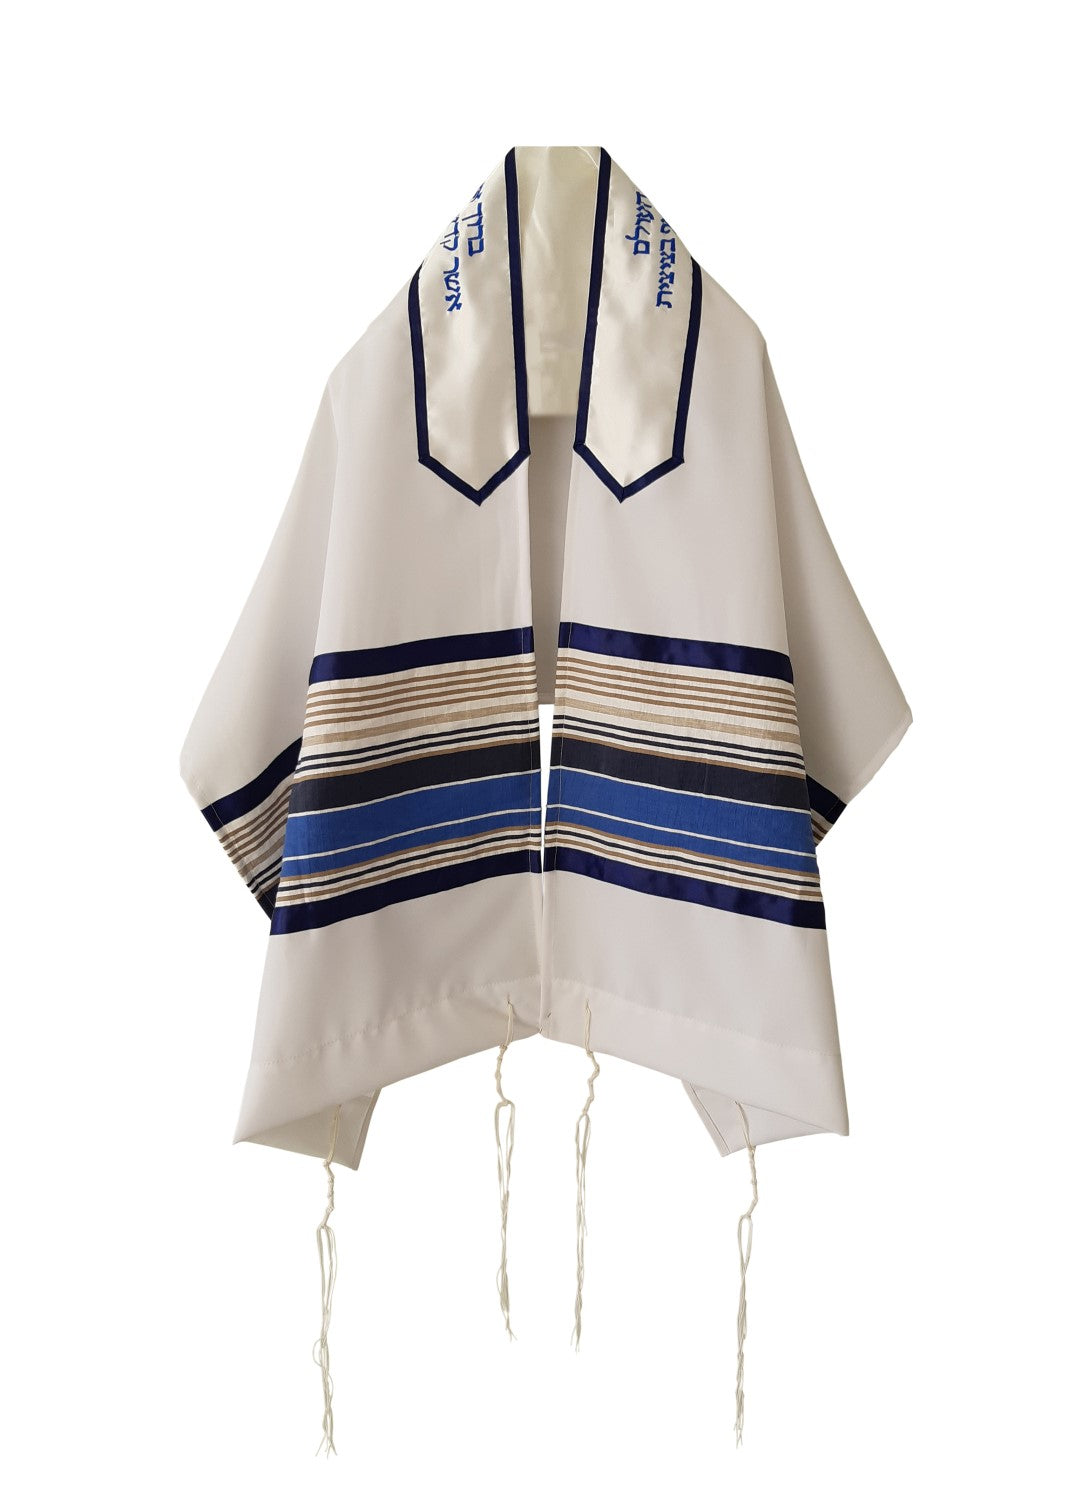 Sea and Sand Tallit for Sale, Bar Mitzvah Talllit, Hebrew Prayer Shawl from Israel, Tallit Prayer Shawl